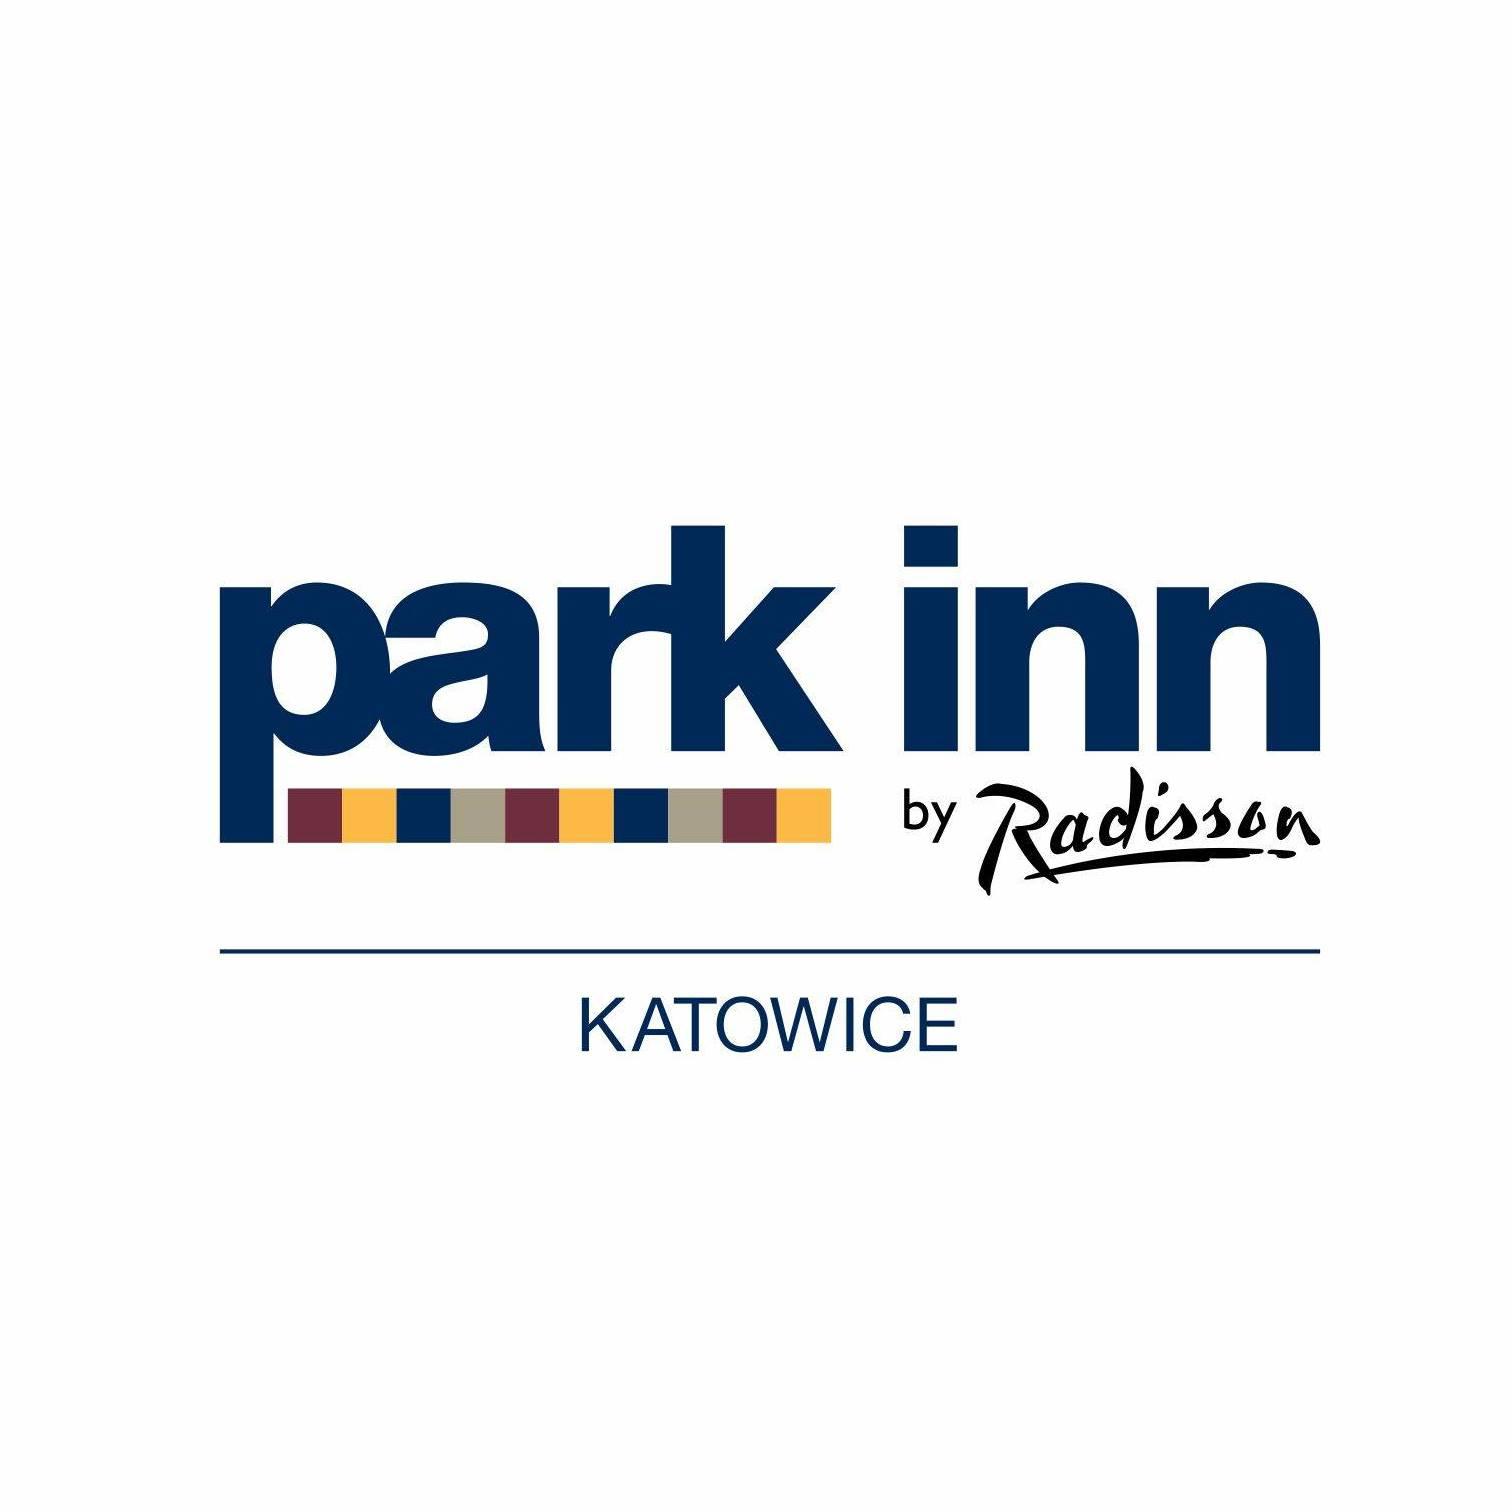 Park Inn by Radisson Katowice - Closed Logo